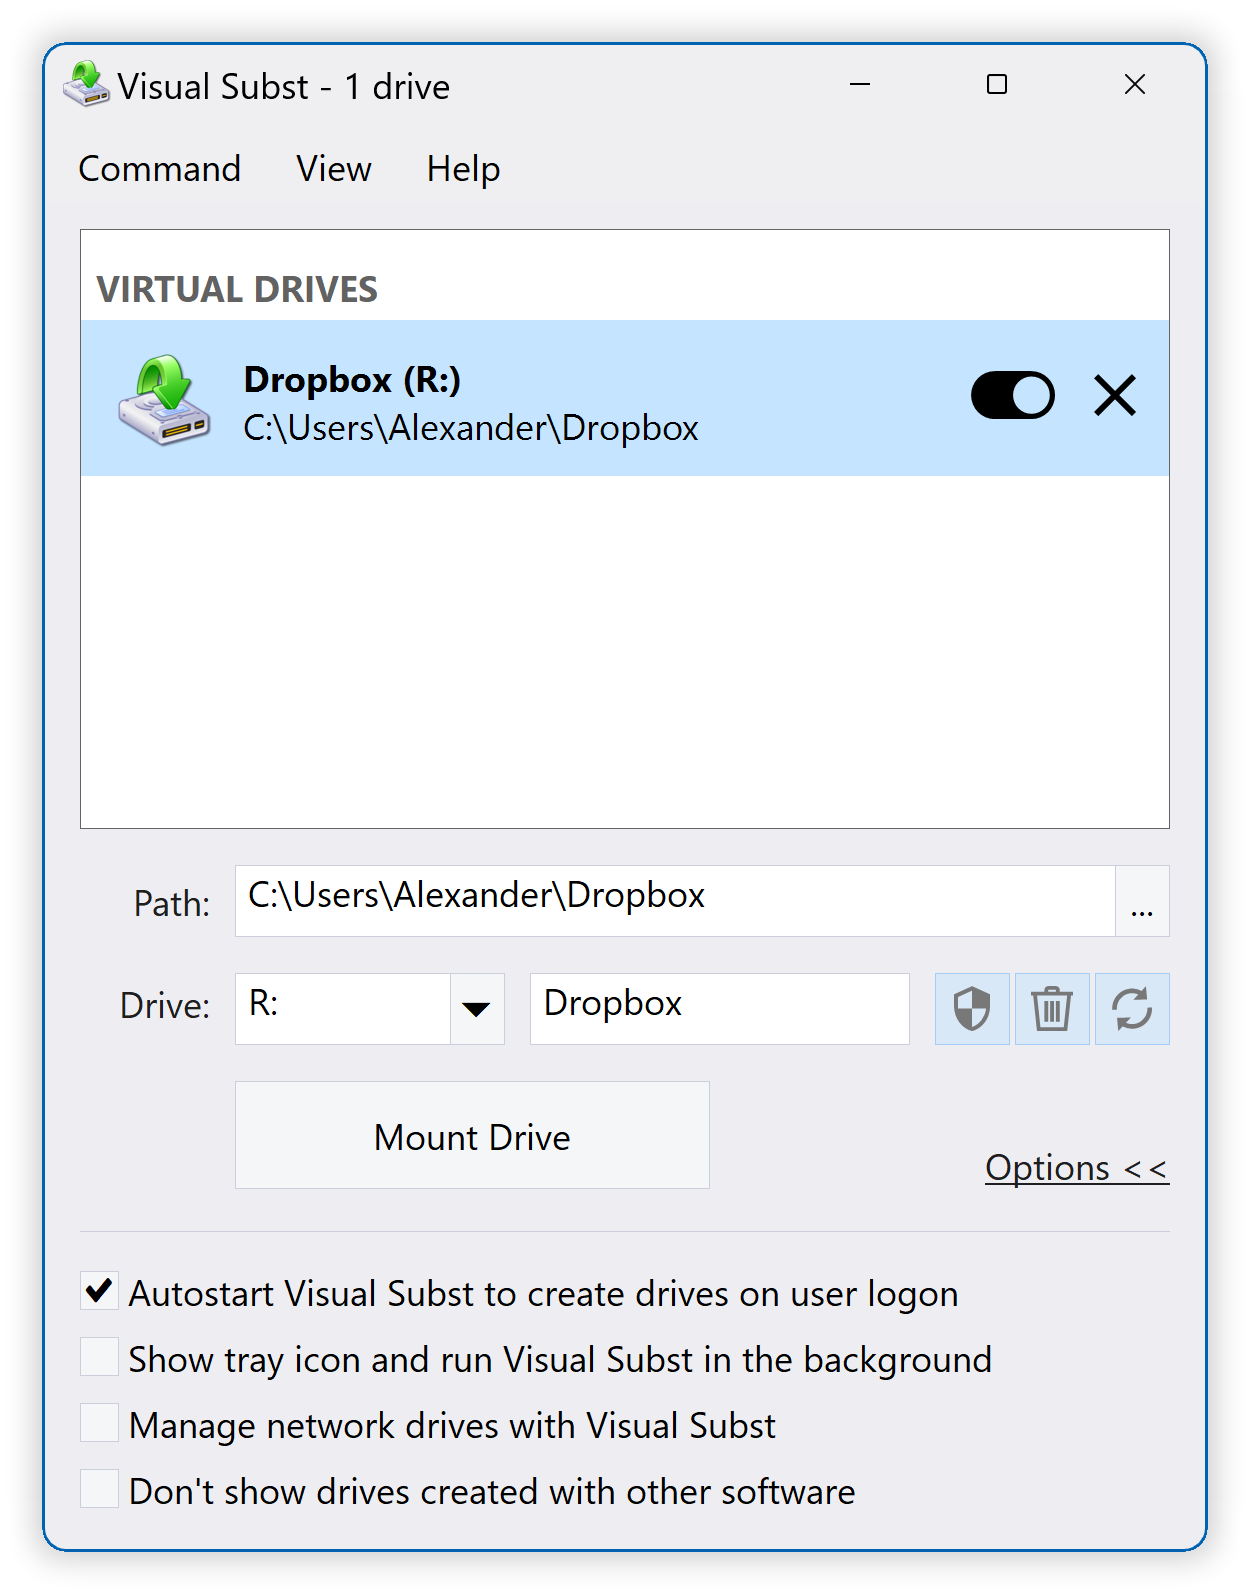 Visual Subst - Dropbox Virtual Drive